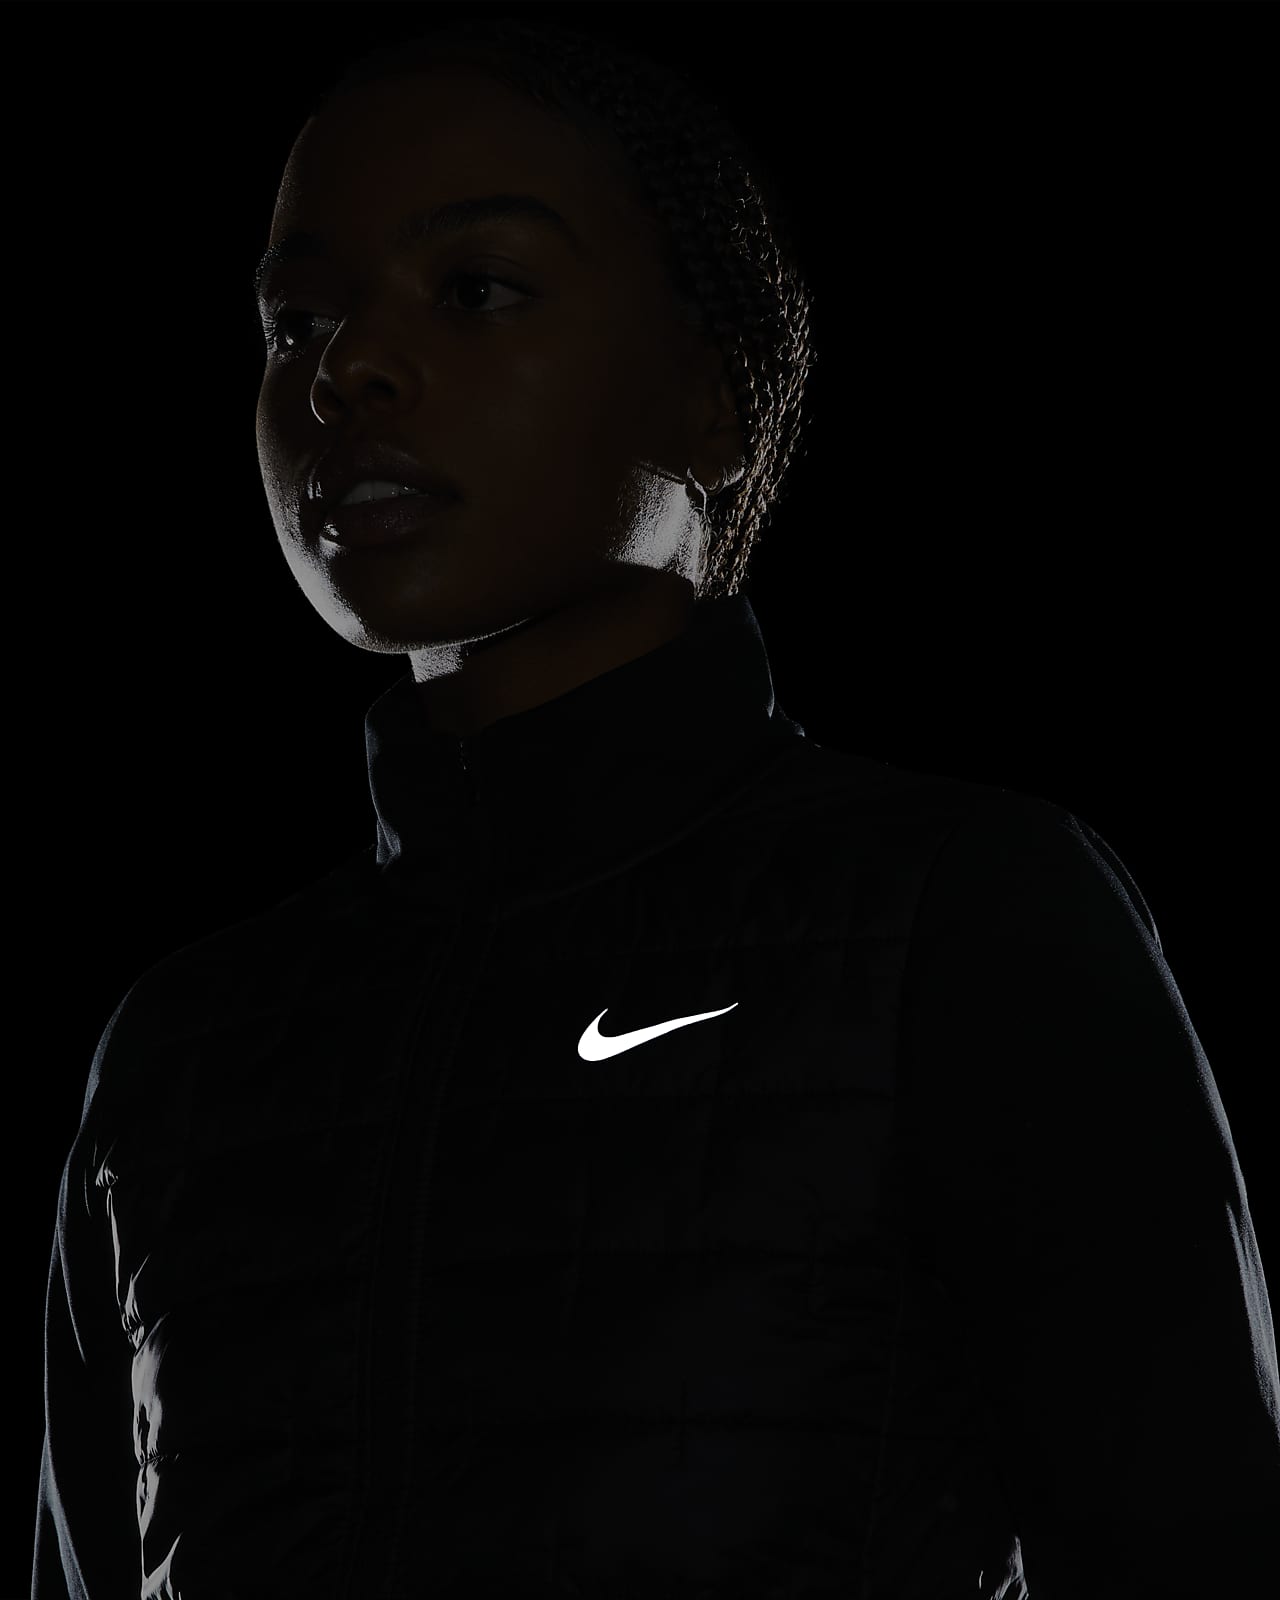 NWT $250 Womens Nike Dynamic Reveal Jacket 828292 451 sz S-L Red Blue  Olympic